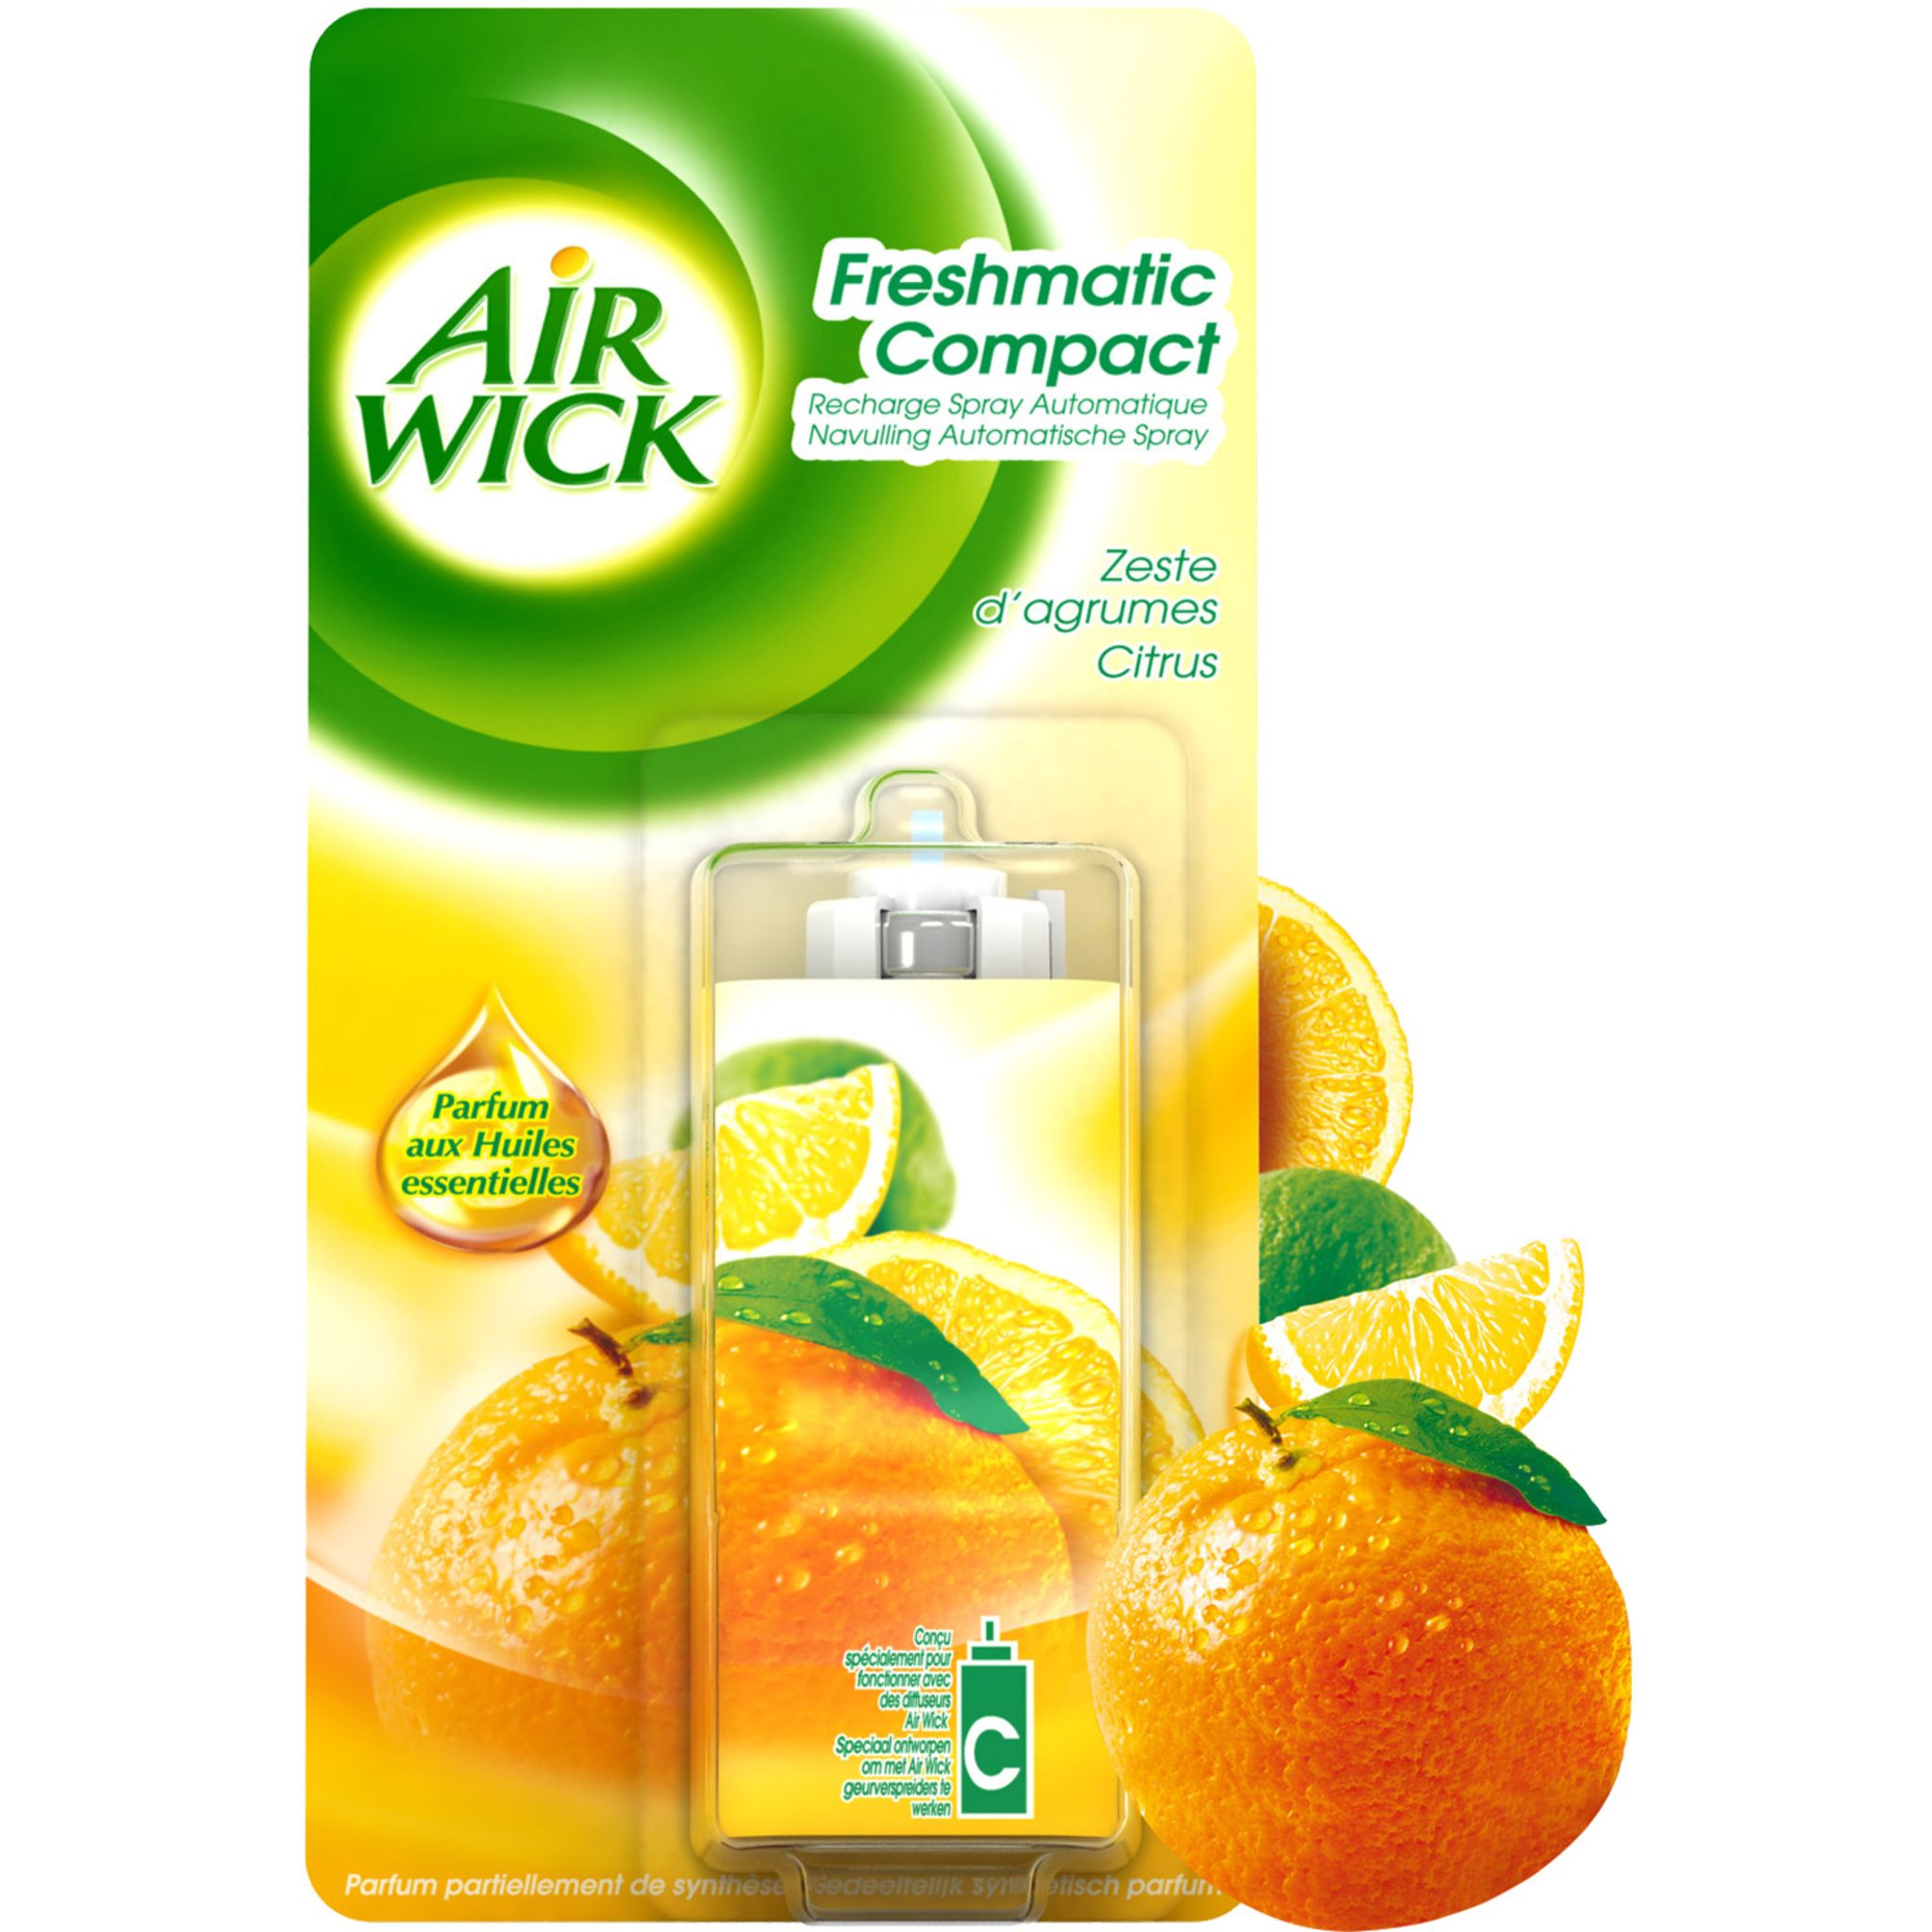 AIR WICK Air Wick Freshmatic recharge spray automatique agrumes et citron  24ml 24ml pas cher 